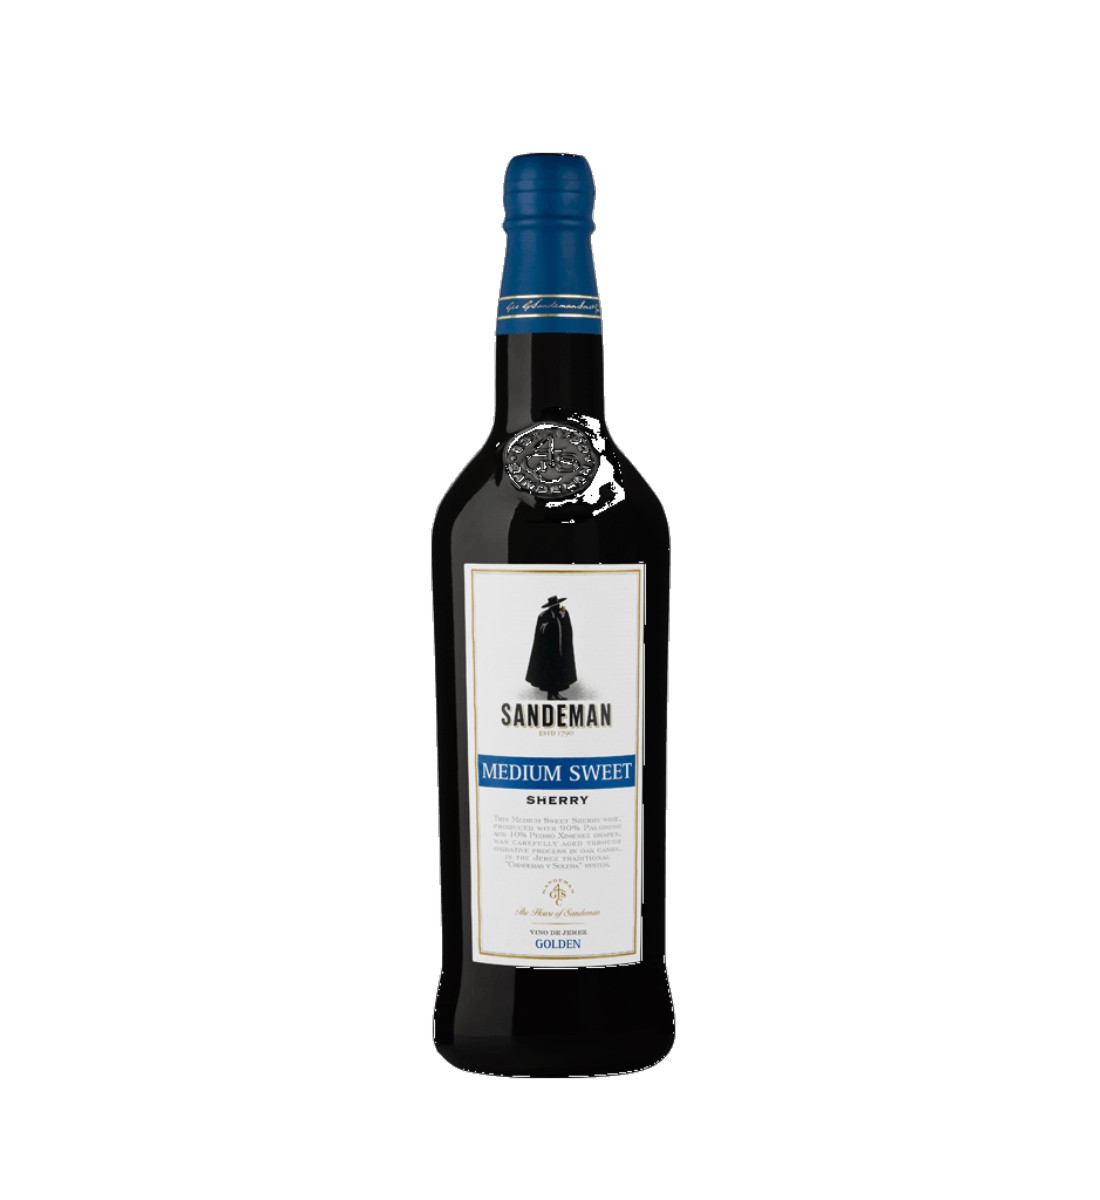 Sandeman Sherry Medium Sweet - Vin Demidulce Alb - Spania - 0.75L